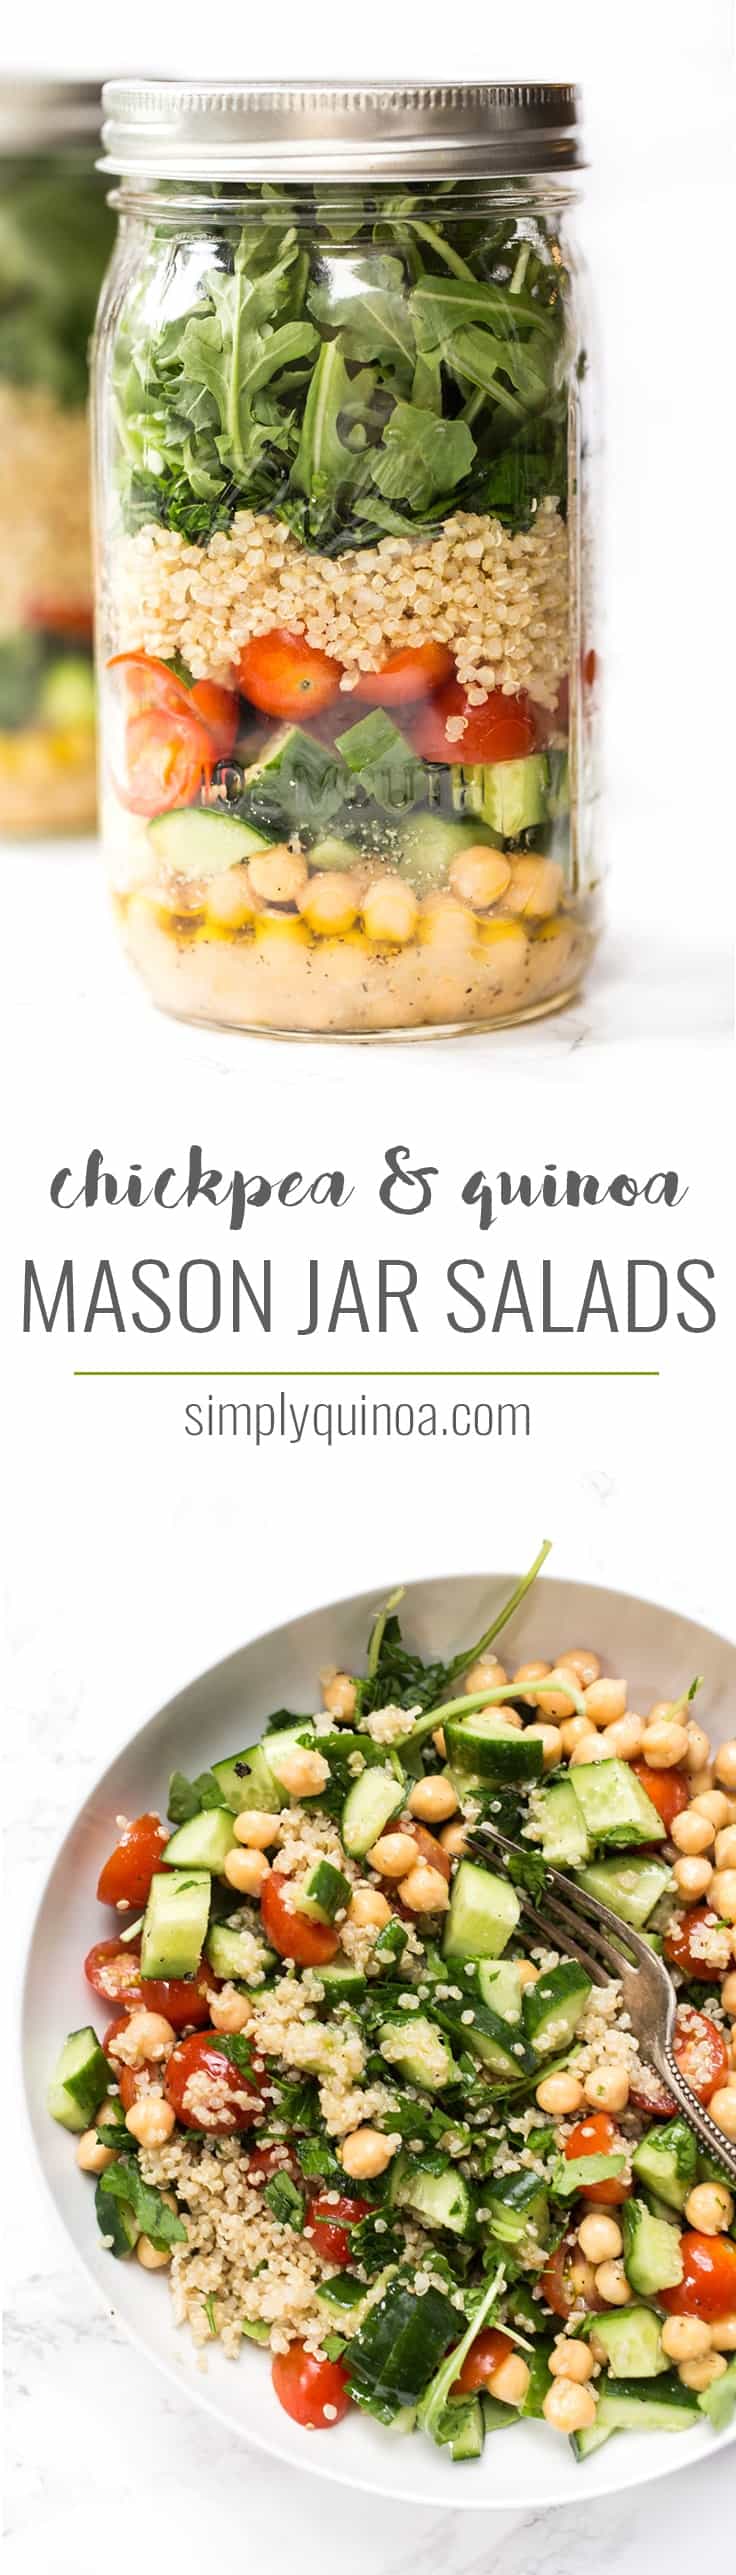 https://www.simplyquinoa.com/wp-content/uploads/2017/08/chickpea-quinoa-mason-jar-salad-long.jpg